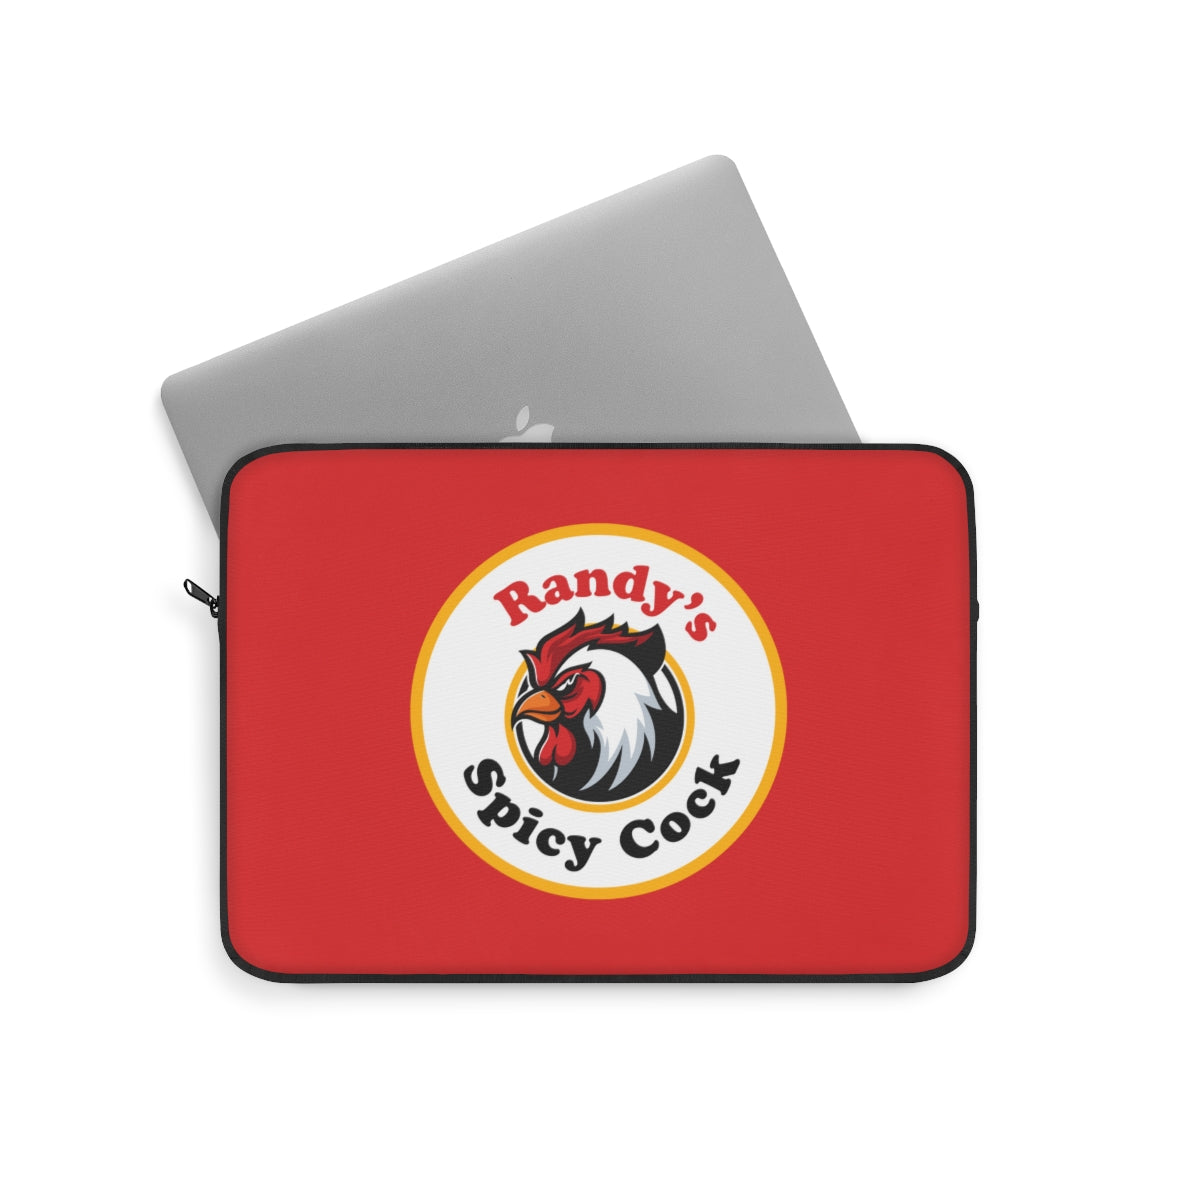 Randy's Spicy Cock Laptop Sleeve